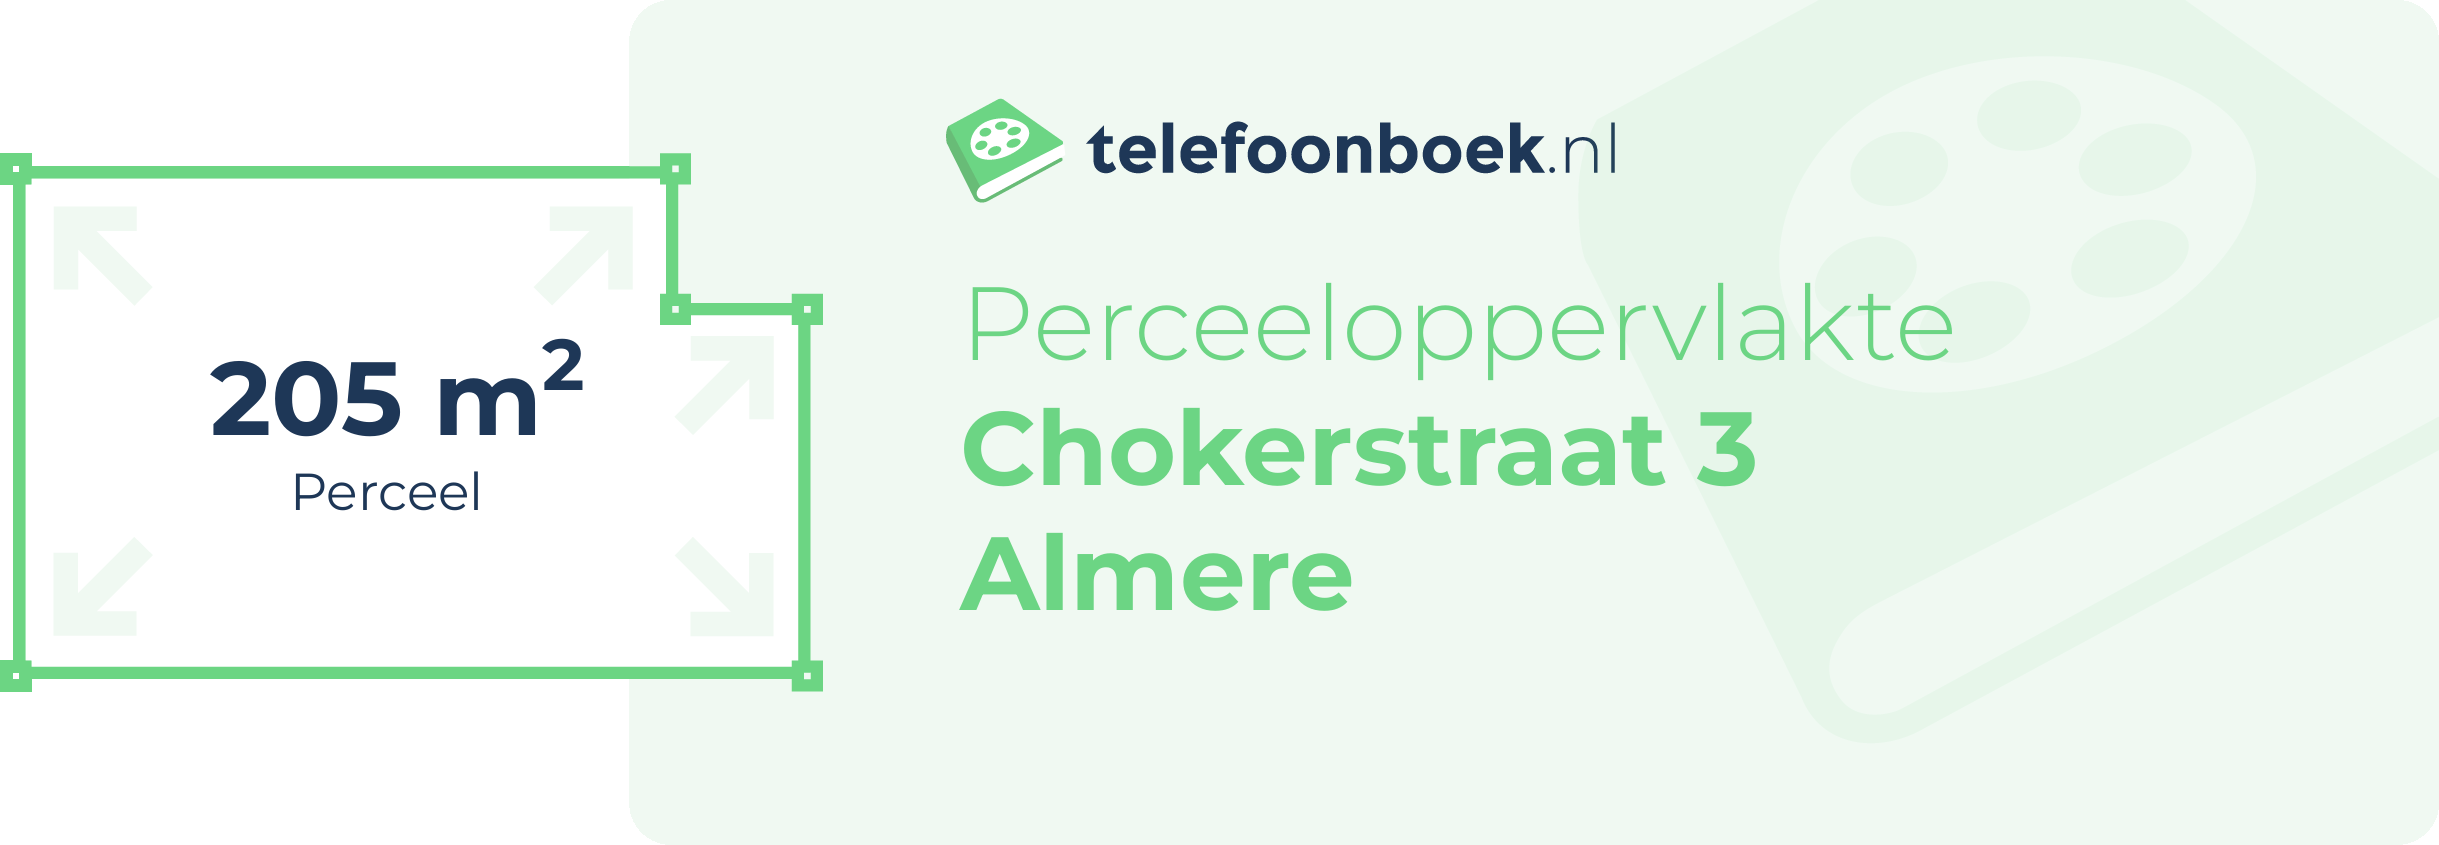 Perceeloppervlakte Chokerstraat 3 Almere